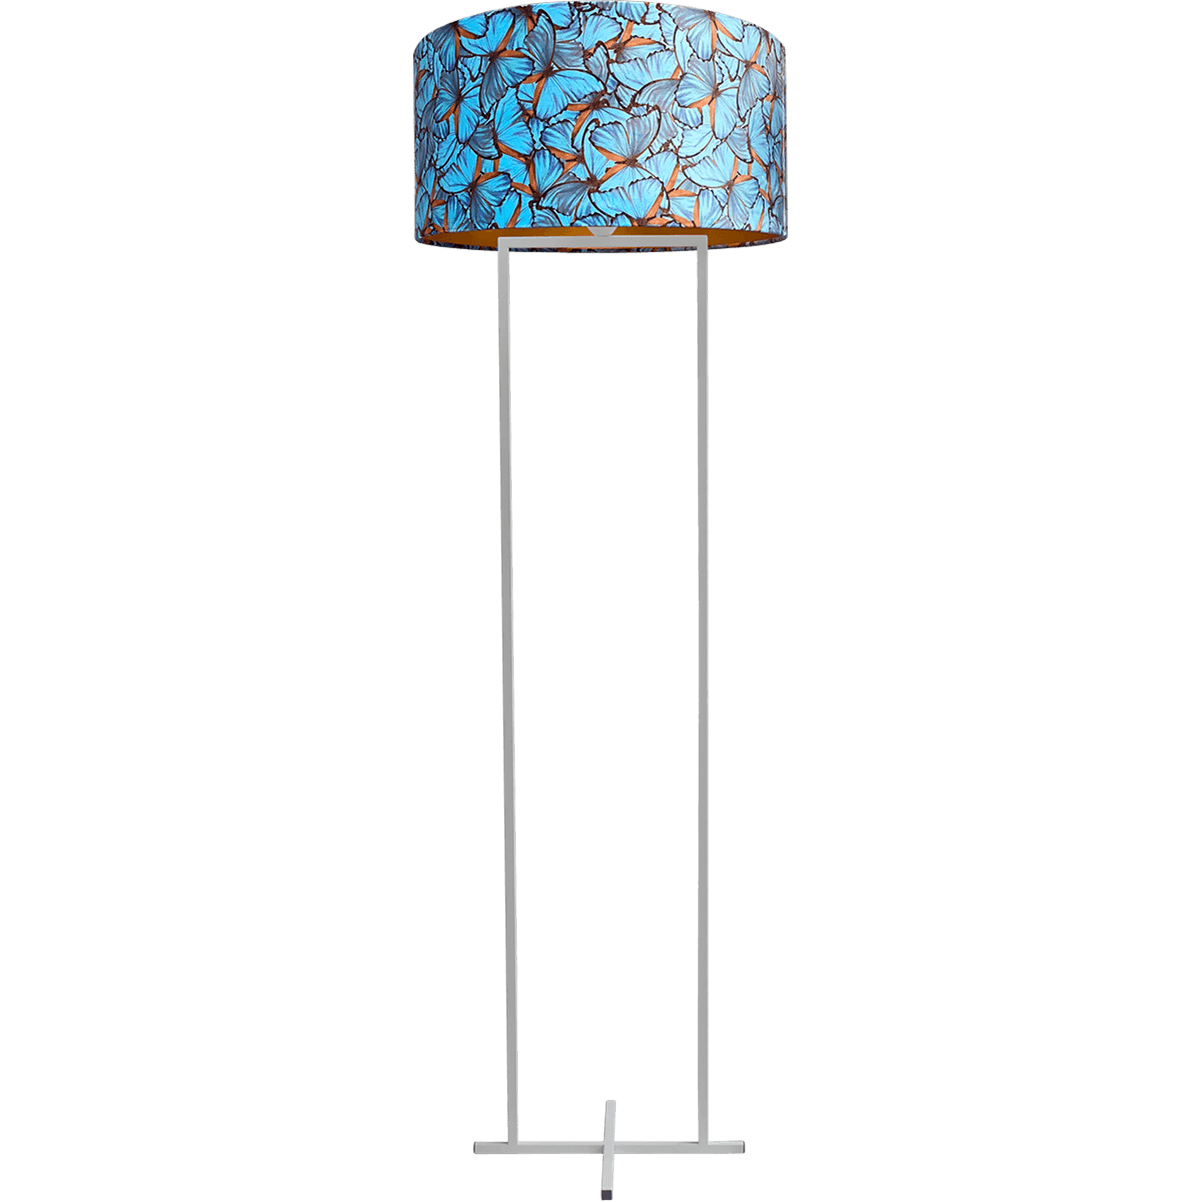 Vloerlamp Cross Rectangle wit structuur hoogte 158cm inclusief lampenkap met butterflymotief Artik butterfly 52/52/25 - MASTERLIGHT